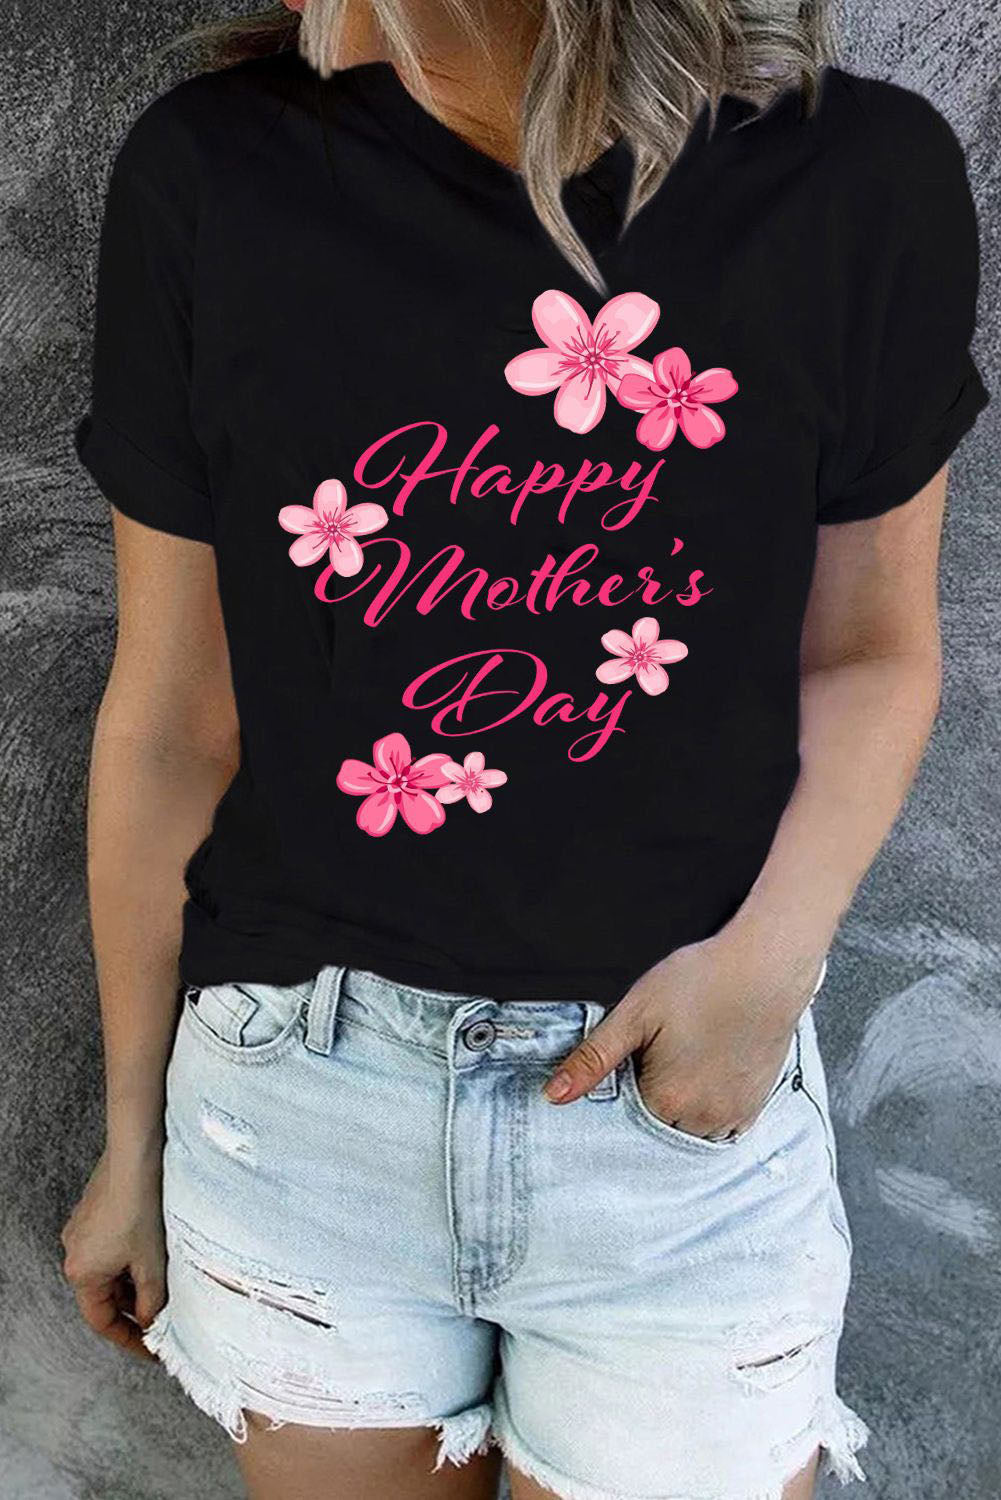 LC25220155-2-S, LC25220155-2-M, LC25220155-2-L, LC25220155-2-XL, LC25220155-2-2XL, Black Happy Mother's Day T Shirt for Women Crew Neck Short Sleeve Tee Tops